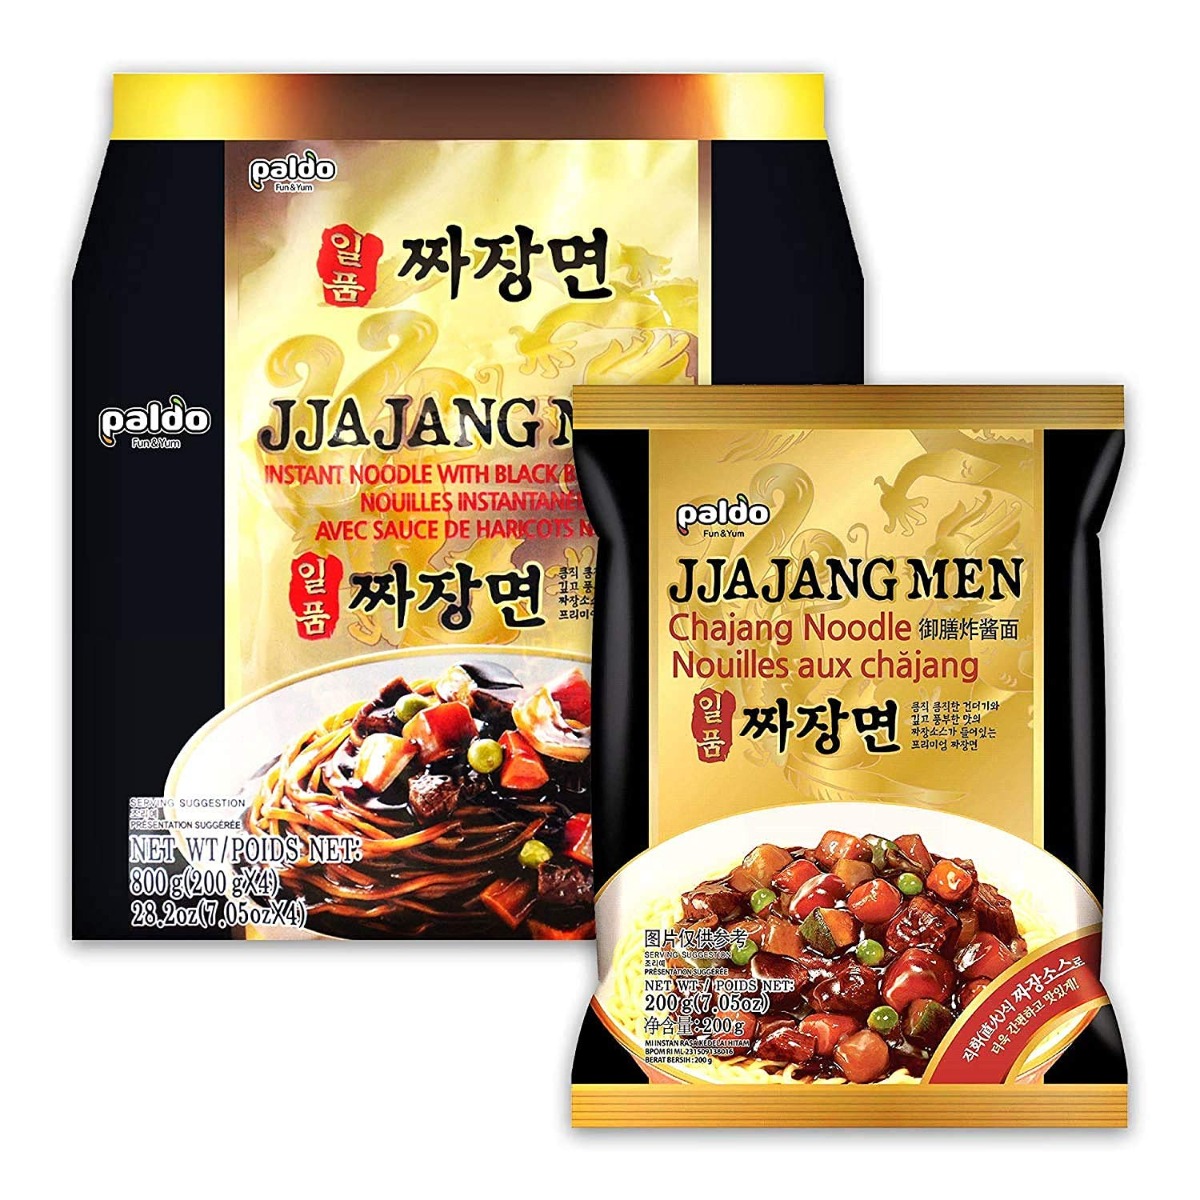 Picture of Paldo KHRM00399630 28.2 oz Jjajangmen Chajang Noodle - 4 Count